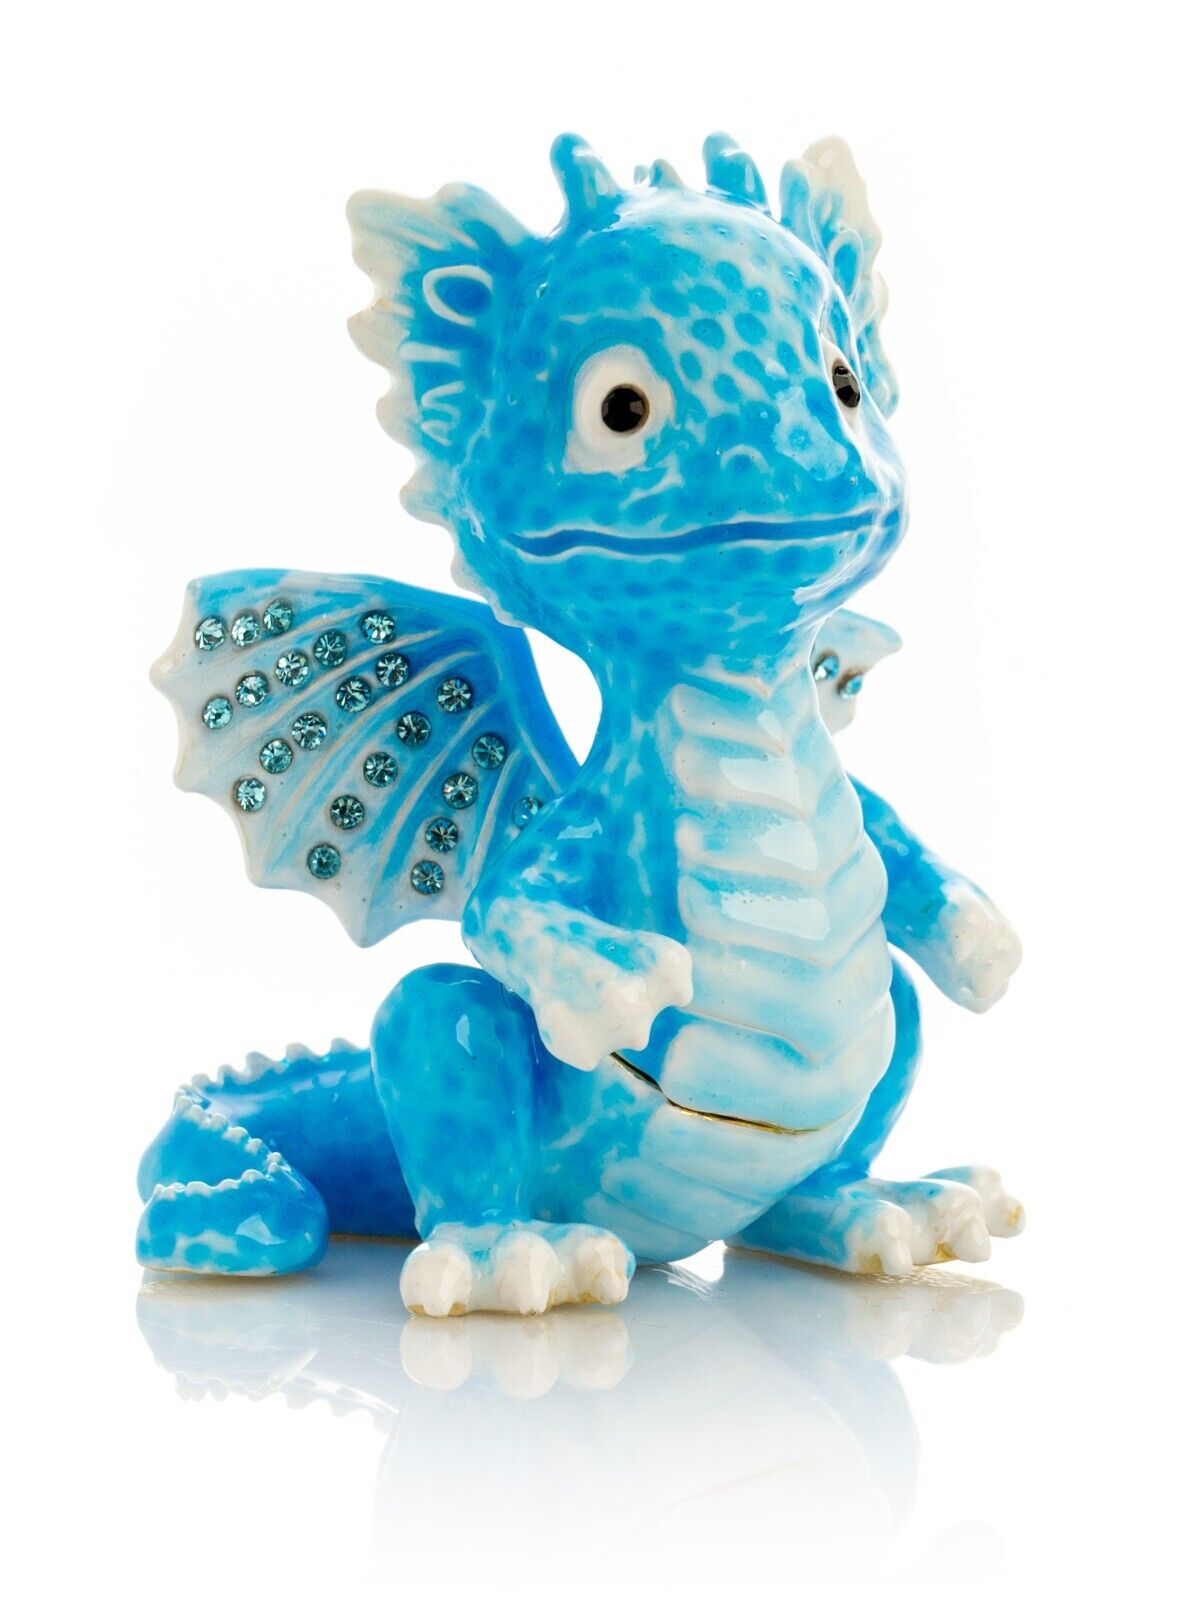 Keren Kopal Baby Blue Dragon hand made Trinket box Decorated & Austrian Crystals